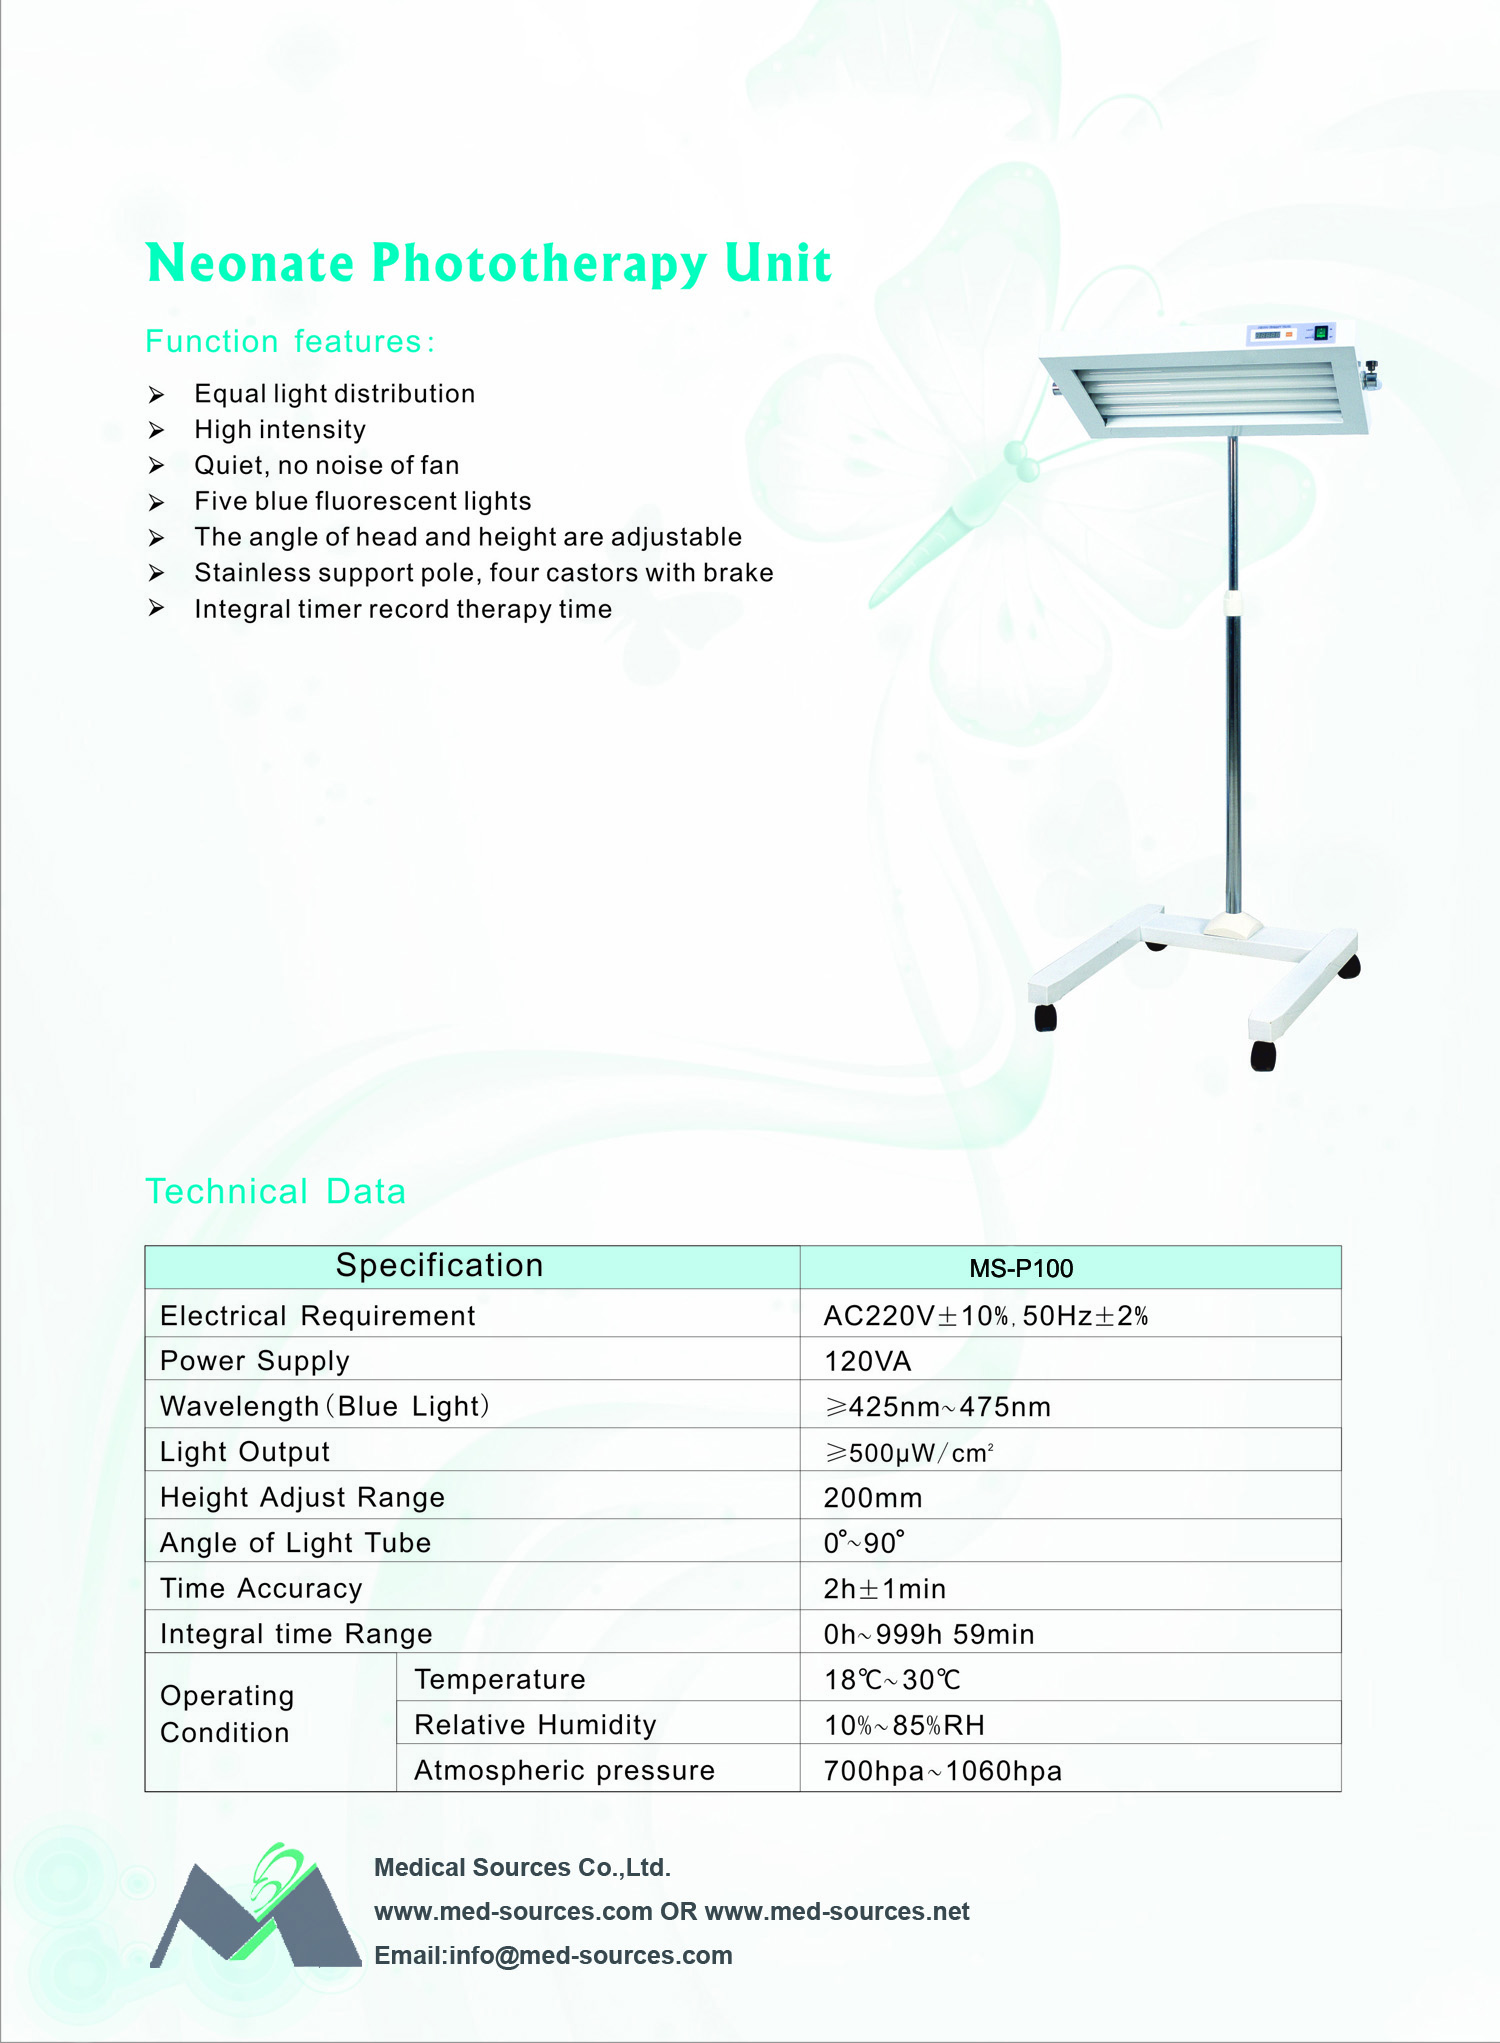 Infant Phototherapy Unit Neonate Phototherapy Unit (MS-P100)